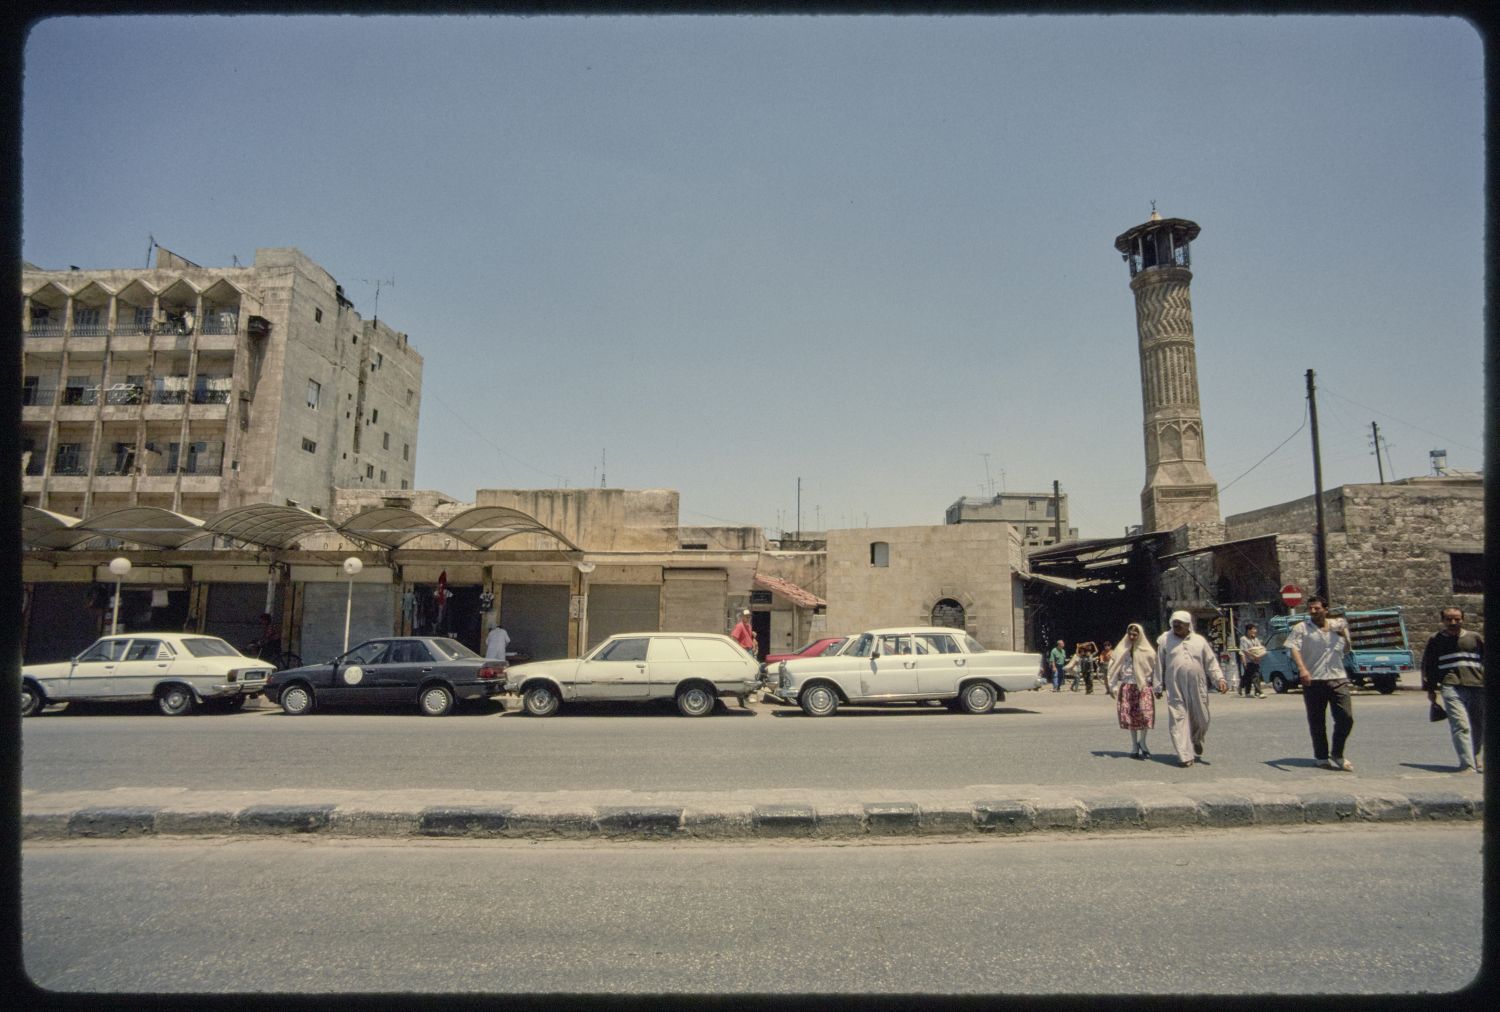 Facades along al-Mutanabbi Street, with the minaret of Jami' al-Mihmandar&nbsp;at right.